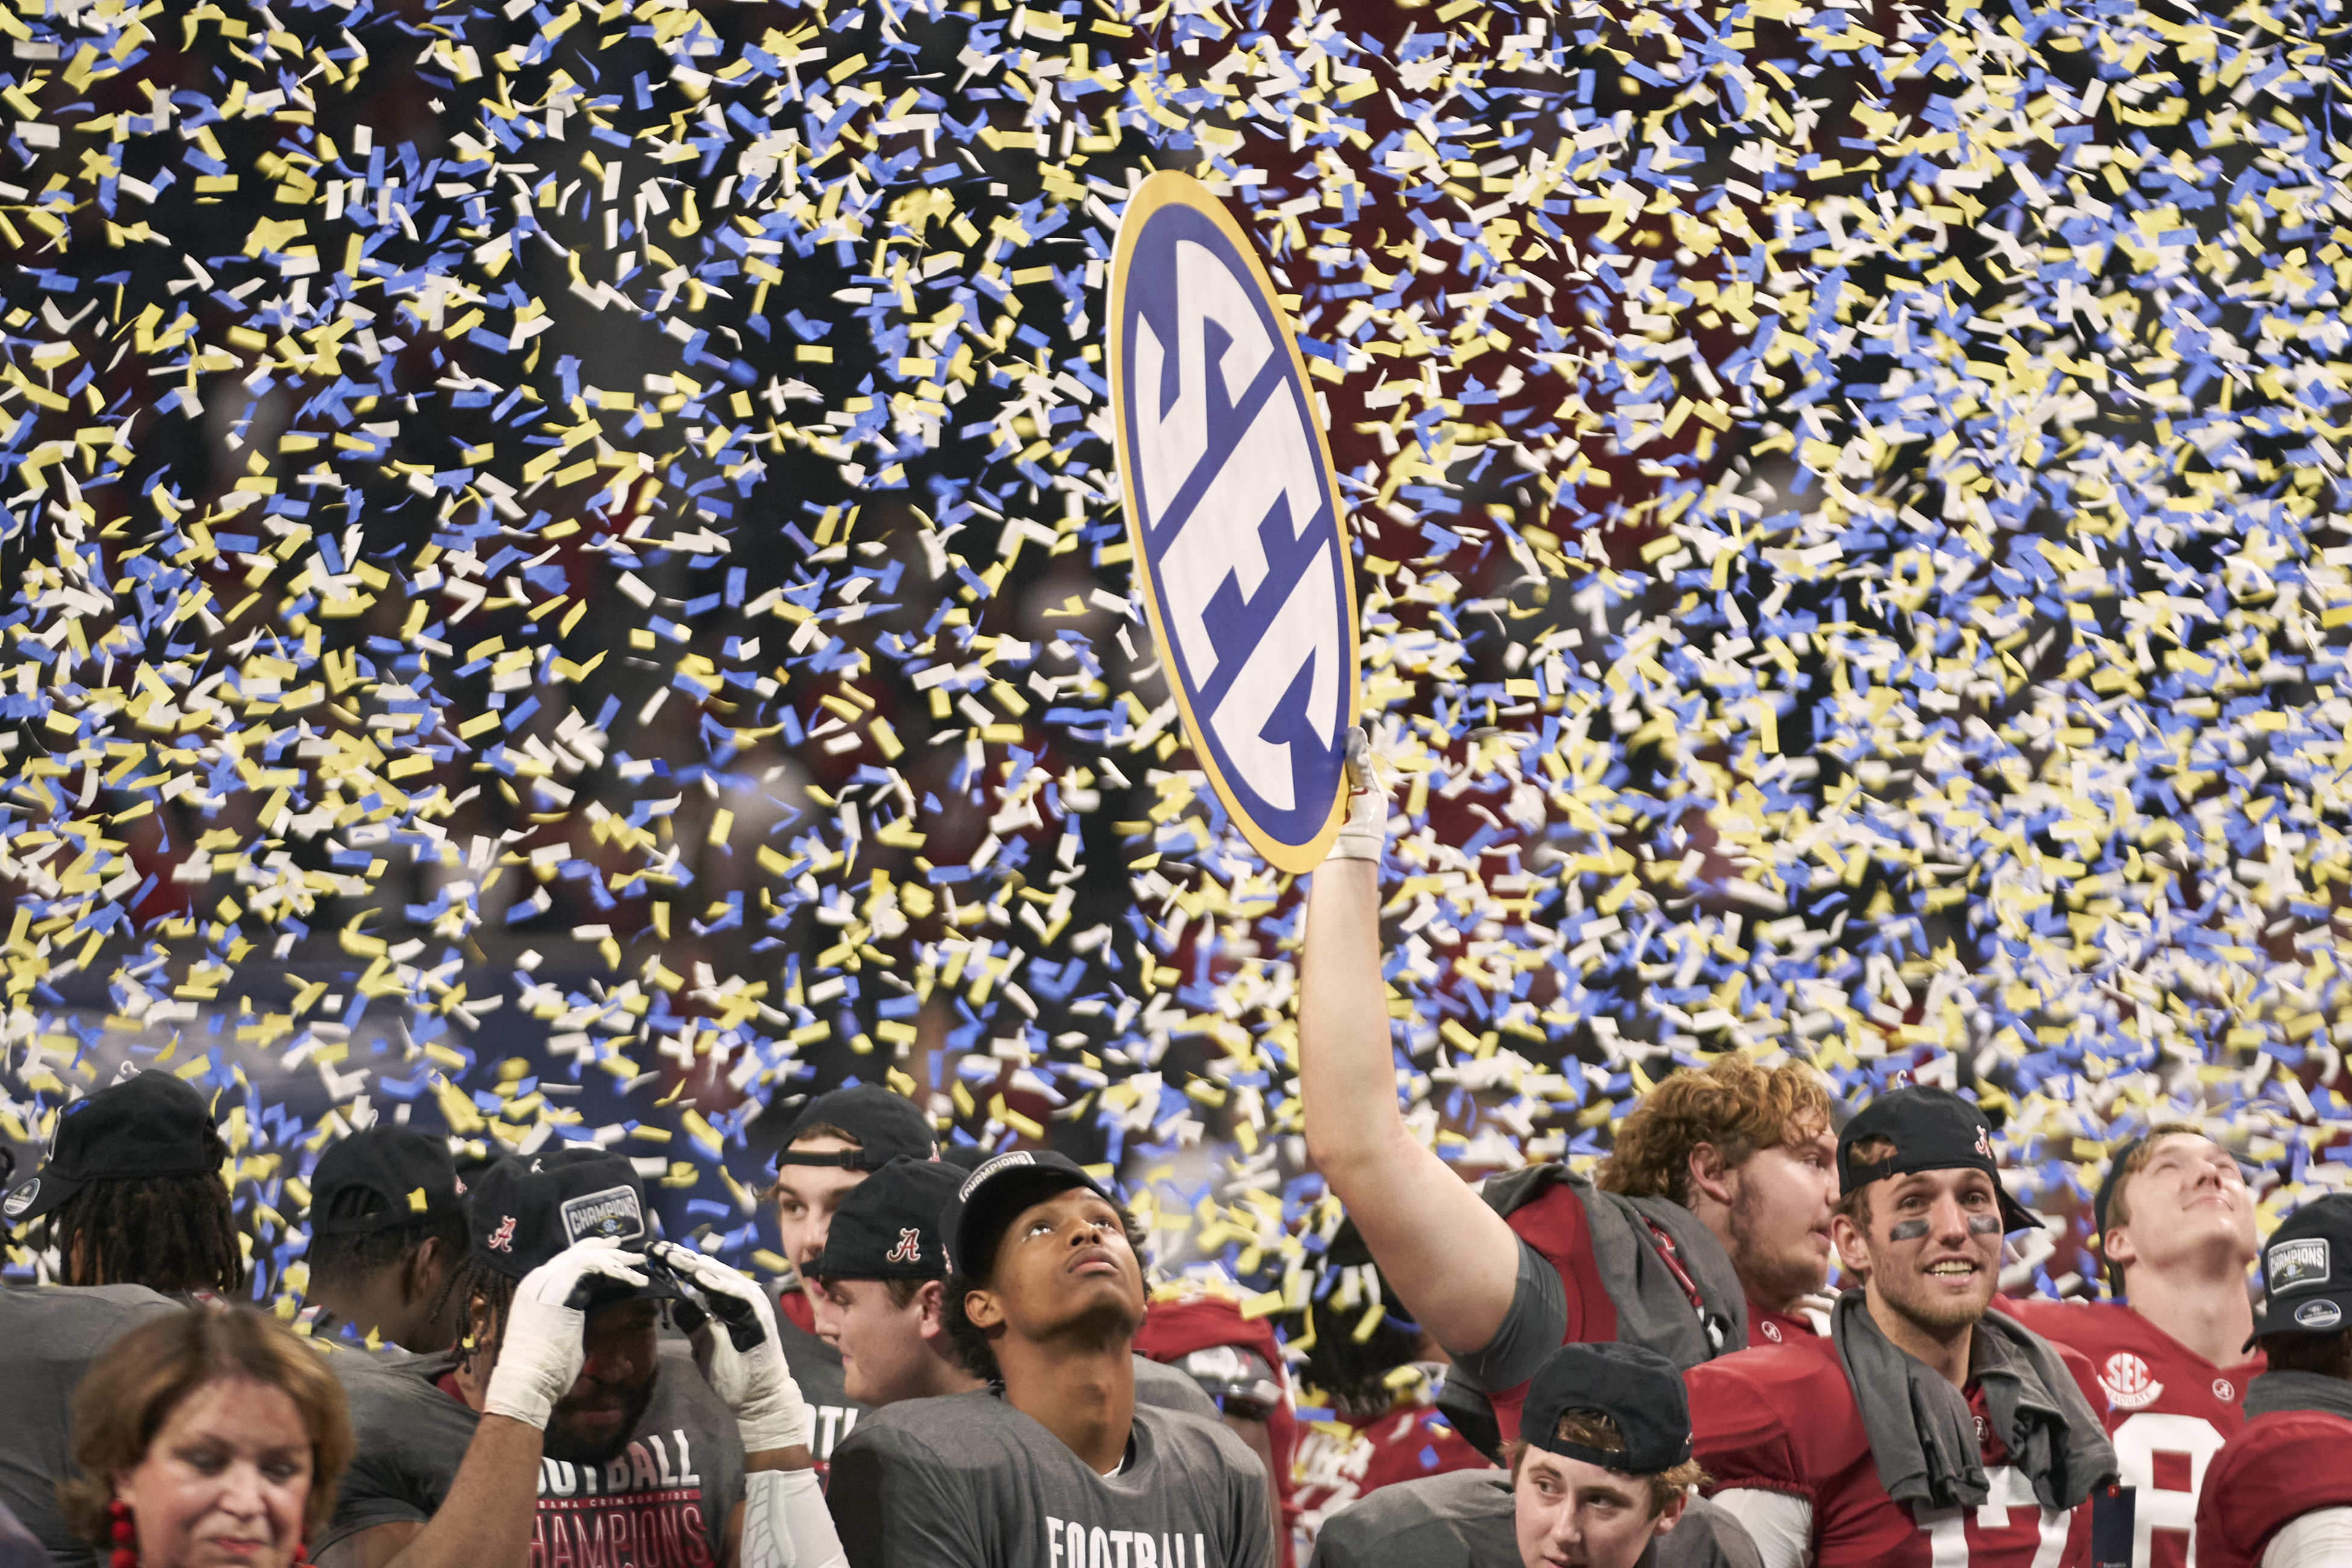 University of Georgia vs University of Alabama, 2021 SEC Championship